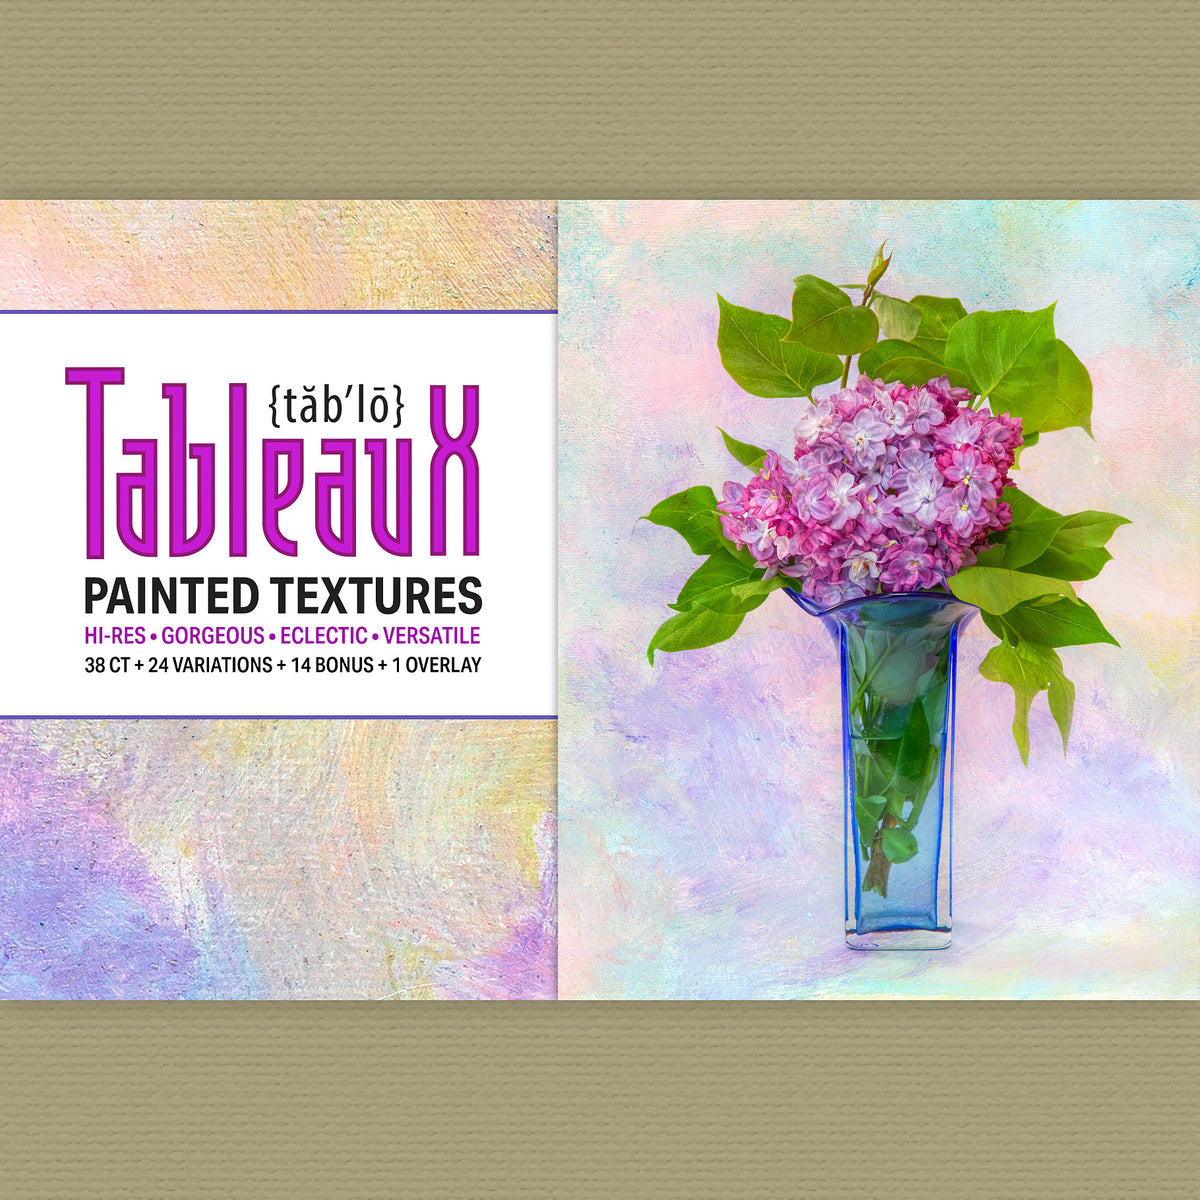 Tableaux painterly fine art texture collection. Commercial license.